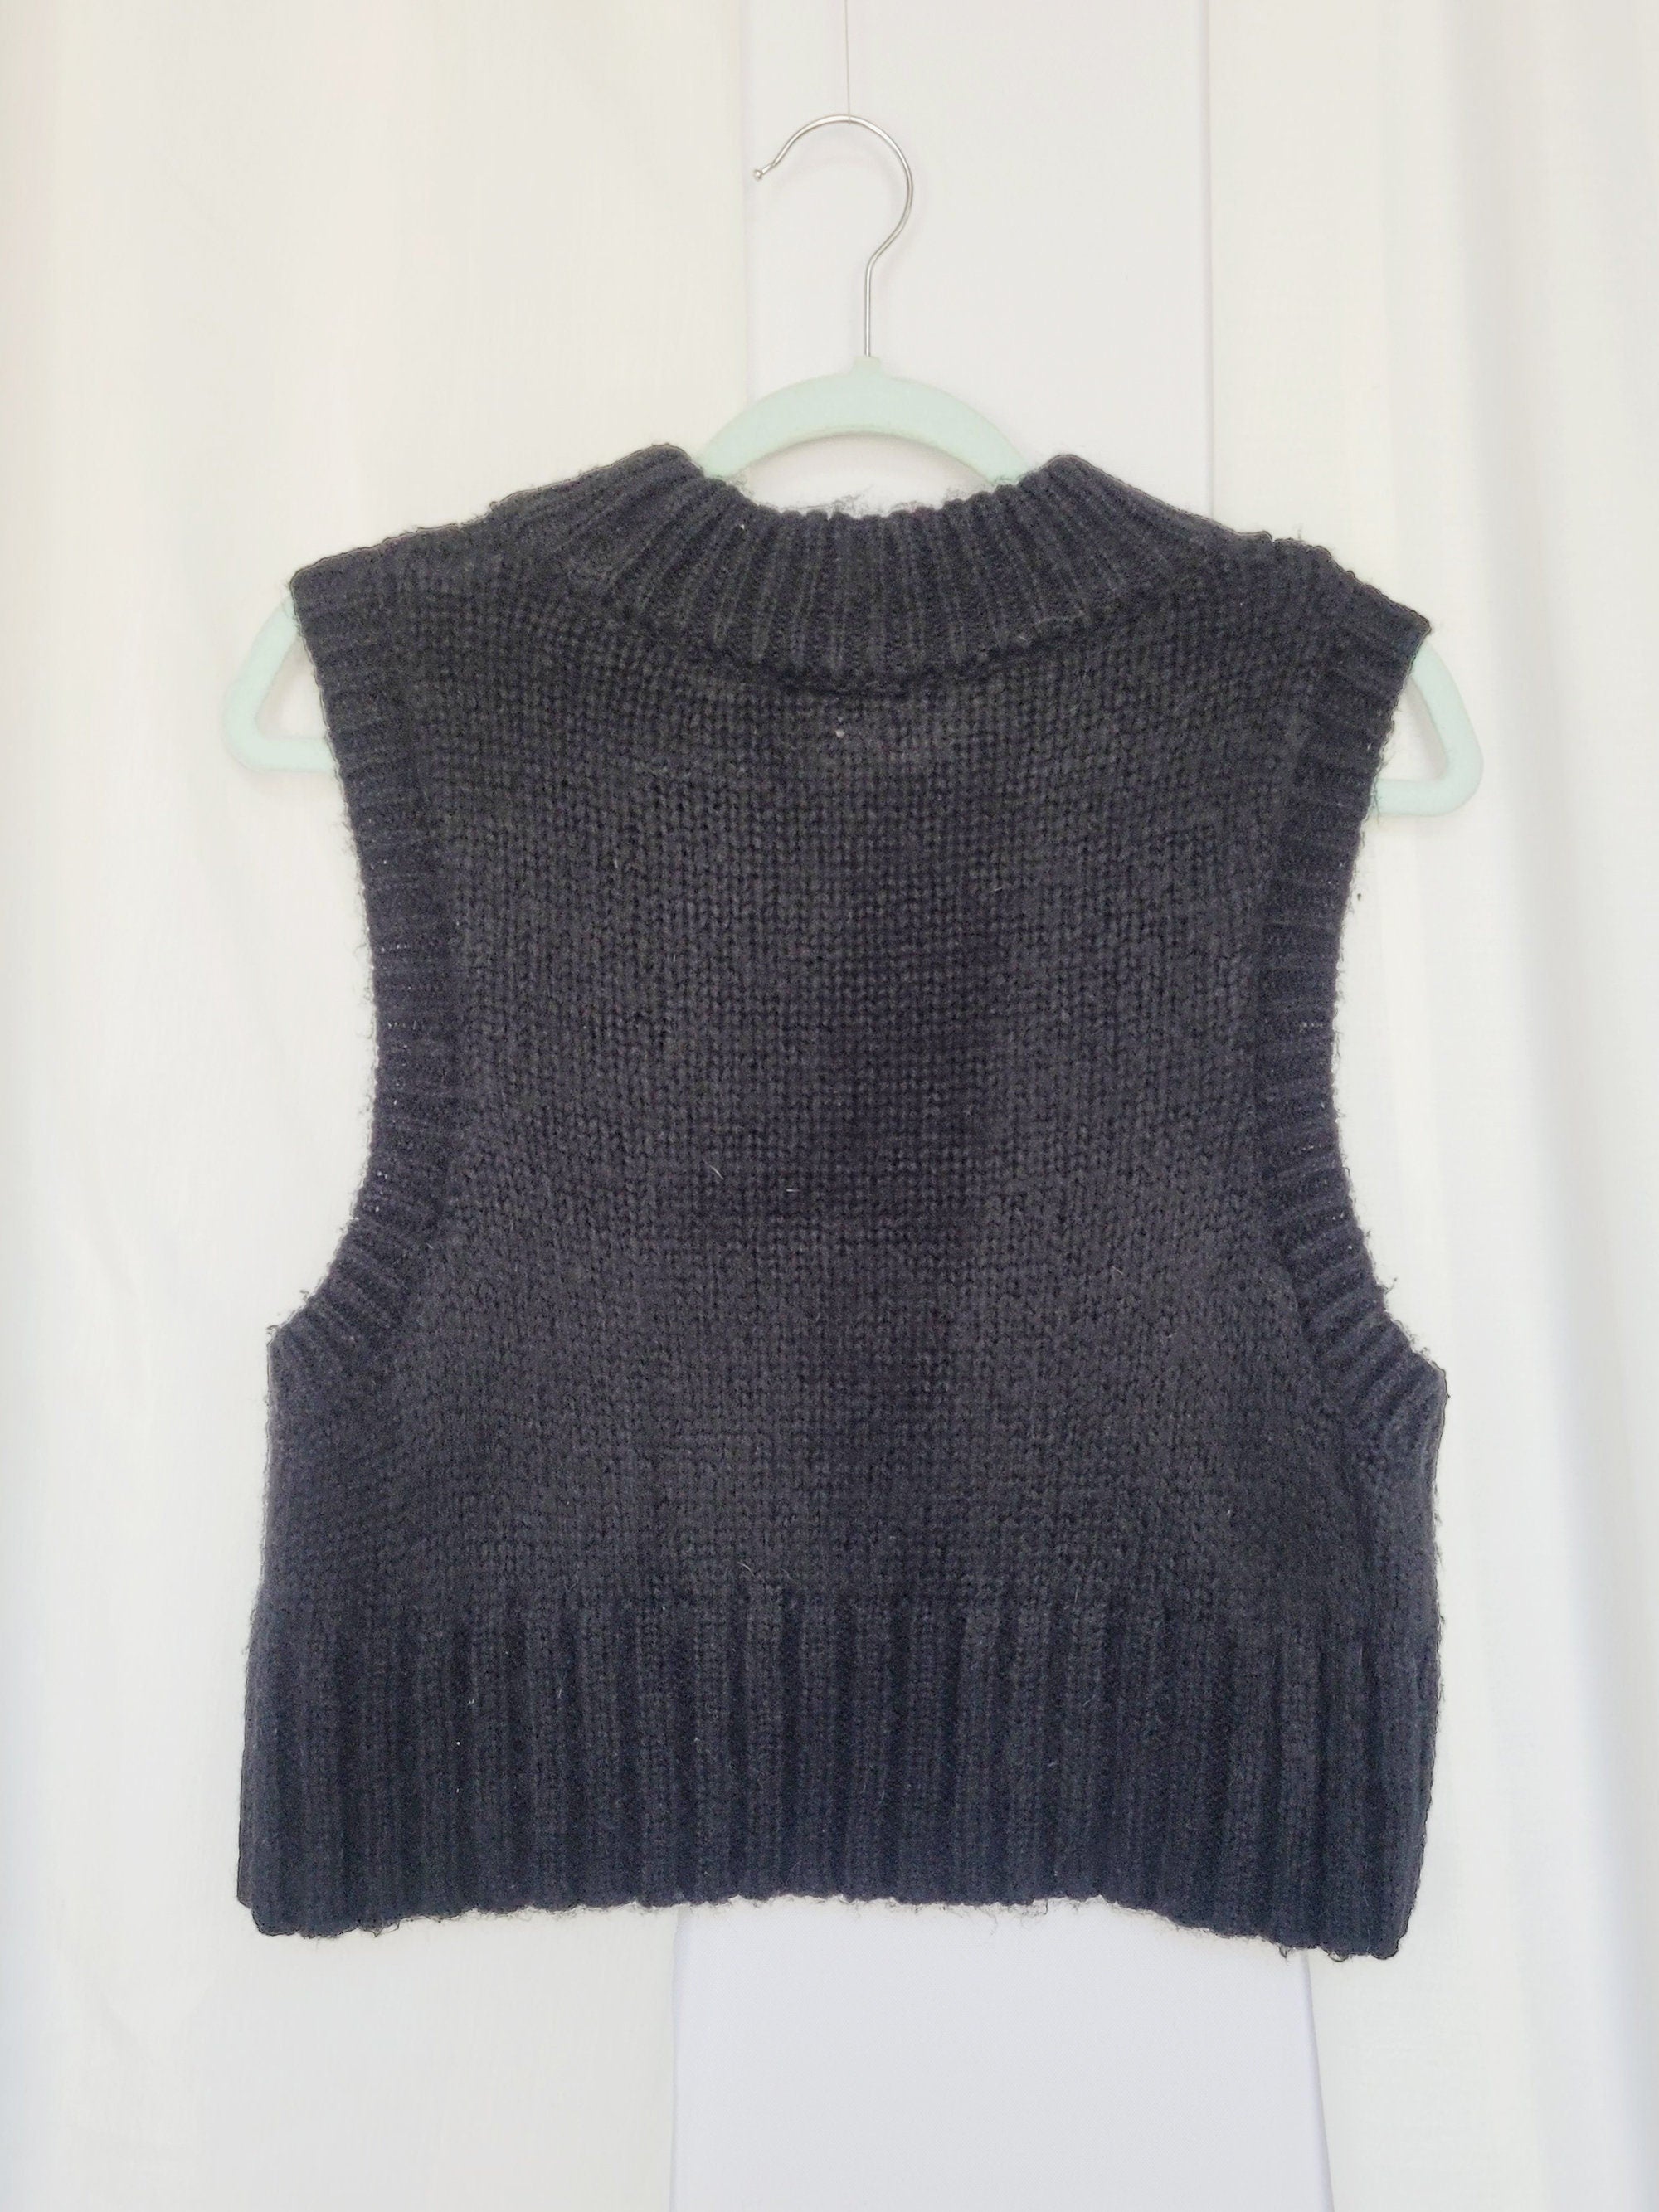 Retro 90s black minimalist cable knit sleeveless top